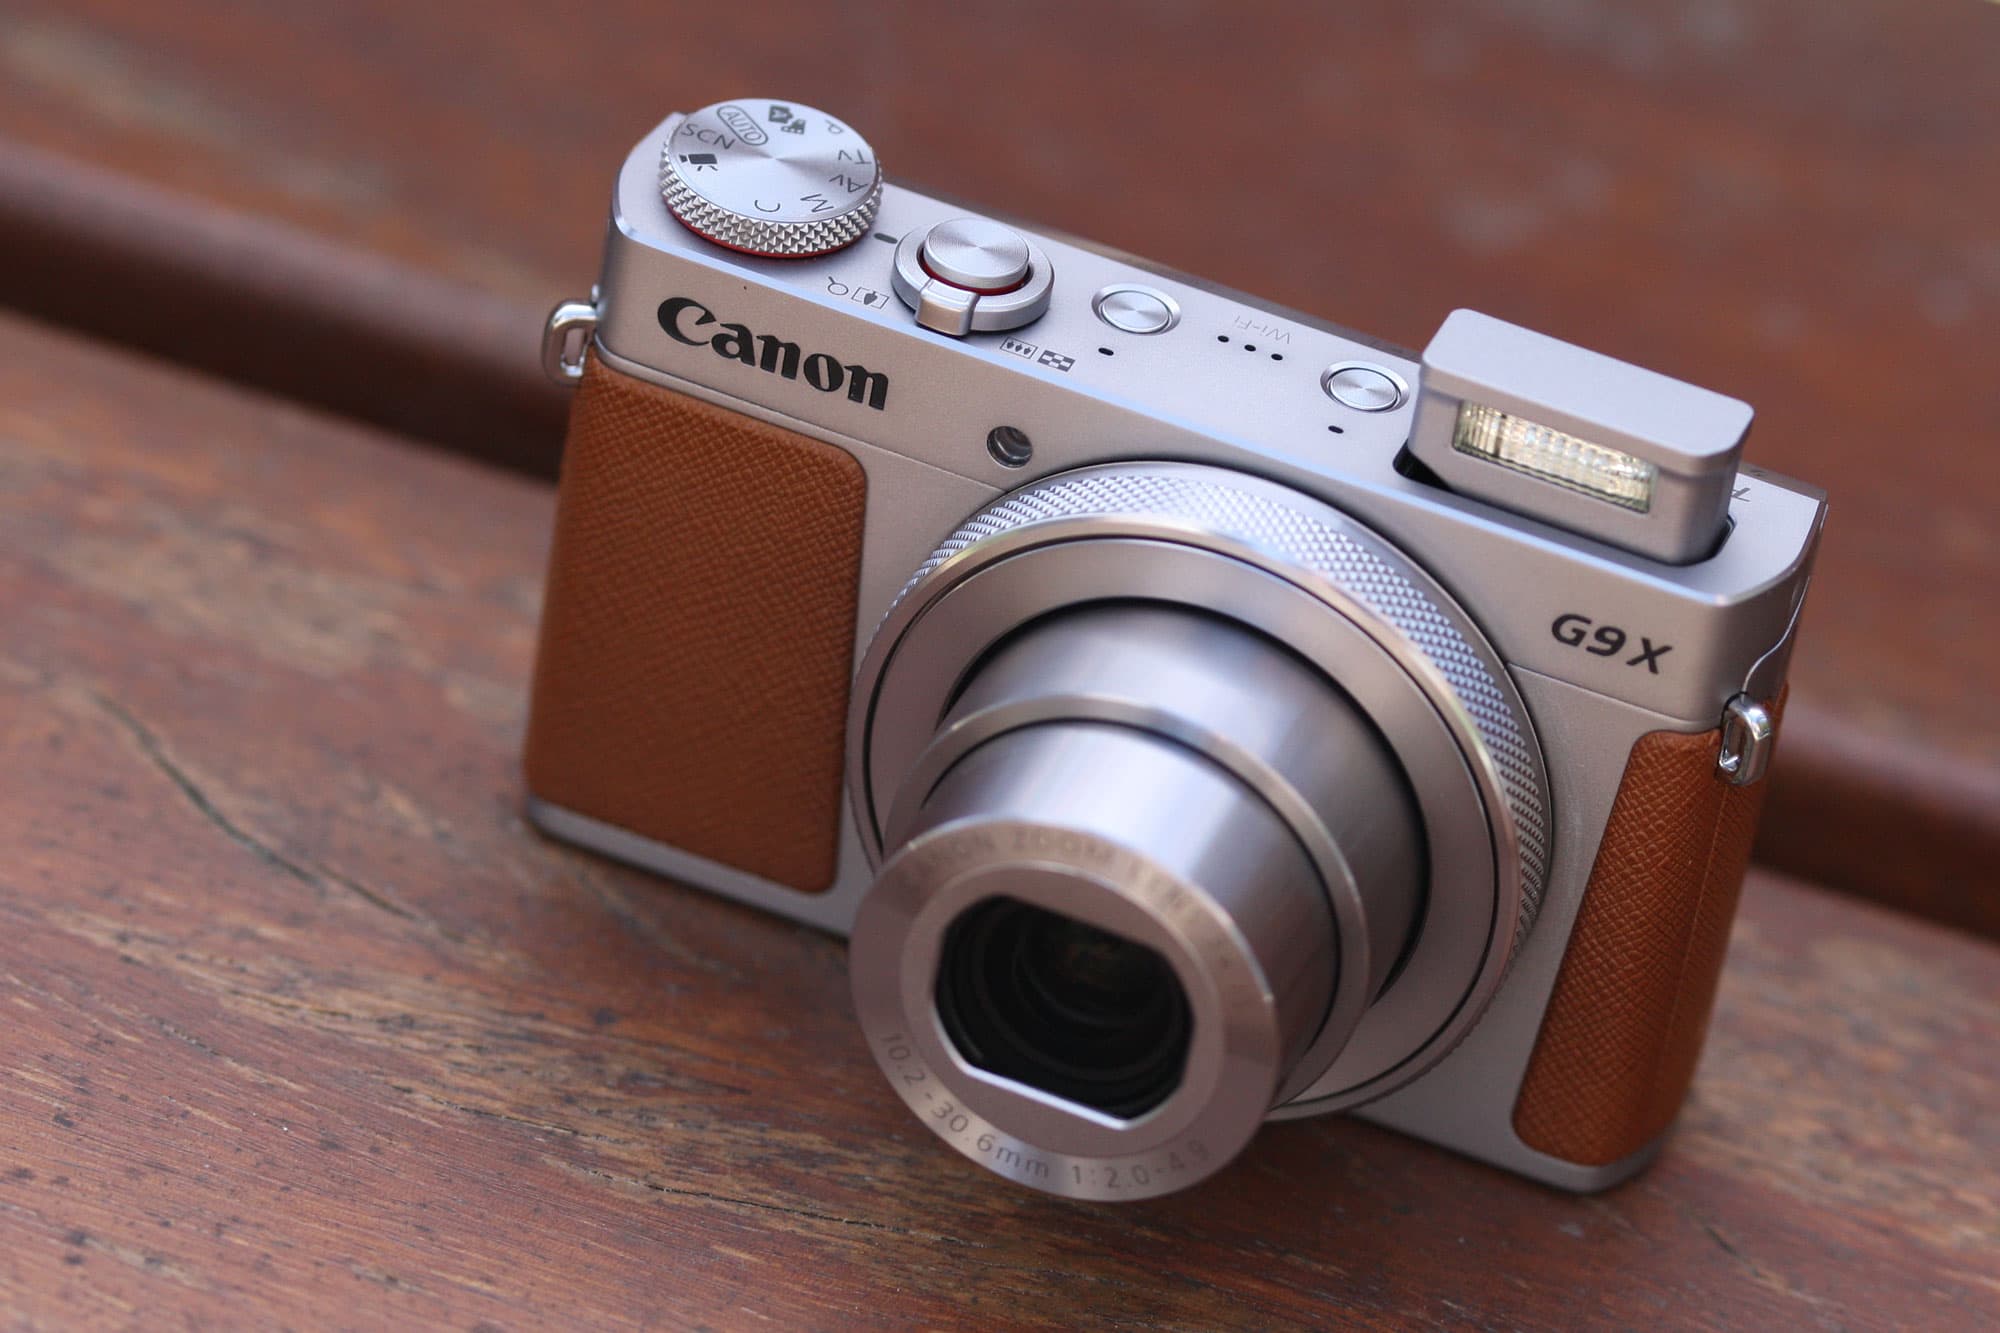 Canon PowerShot G9 X Mark II - slim, stylish and highly capable